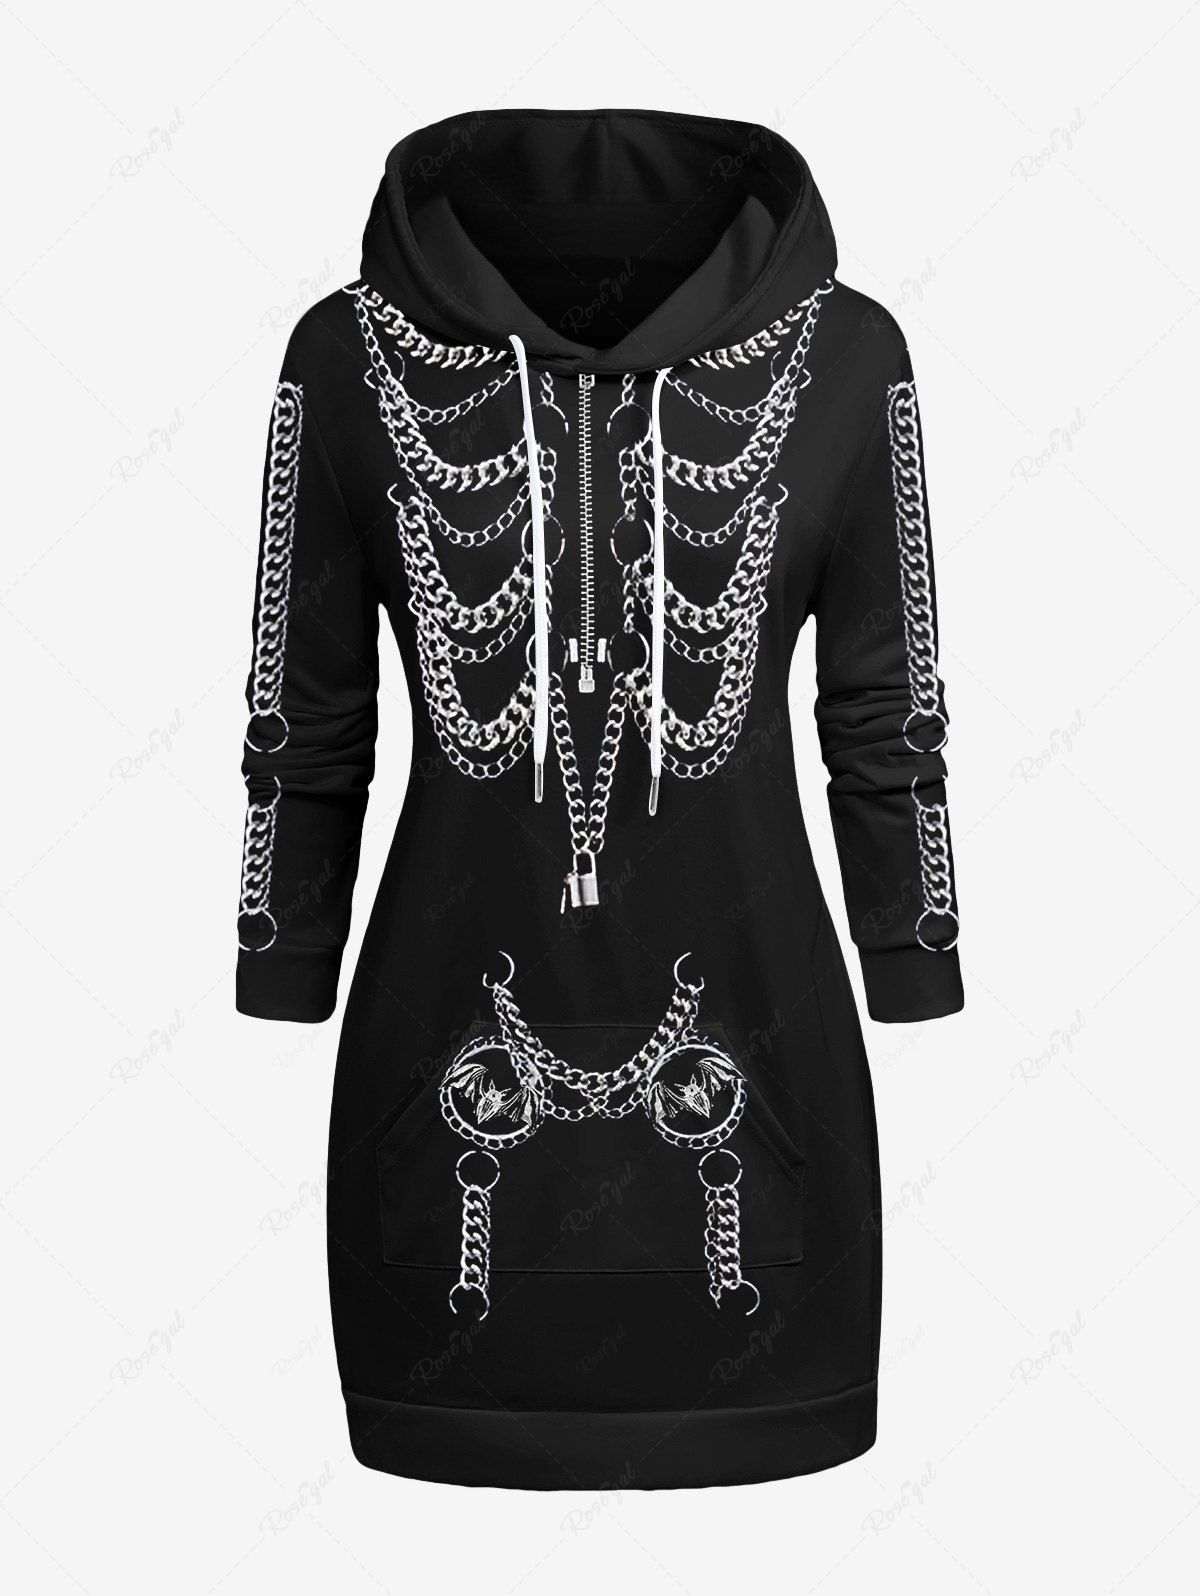 Shop Plus Size Bat Zipper 3D Print Halloween Skeleton Style Chains Drawstring Hooded Dress  